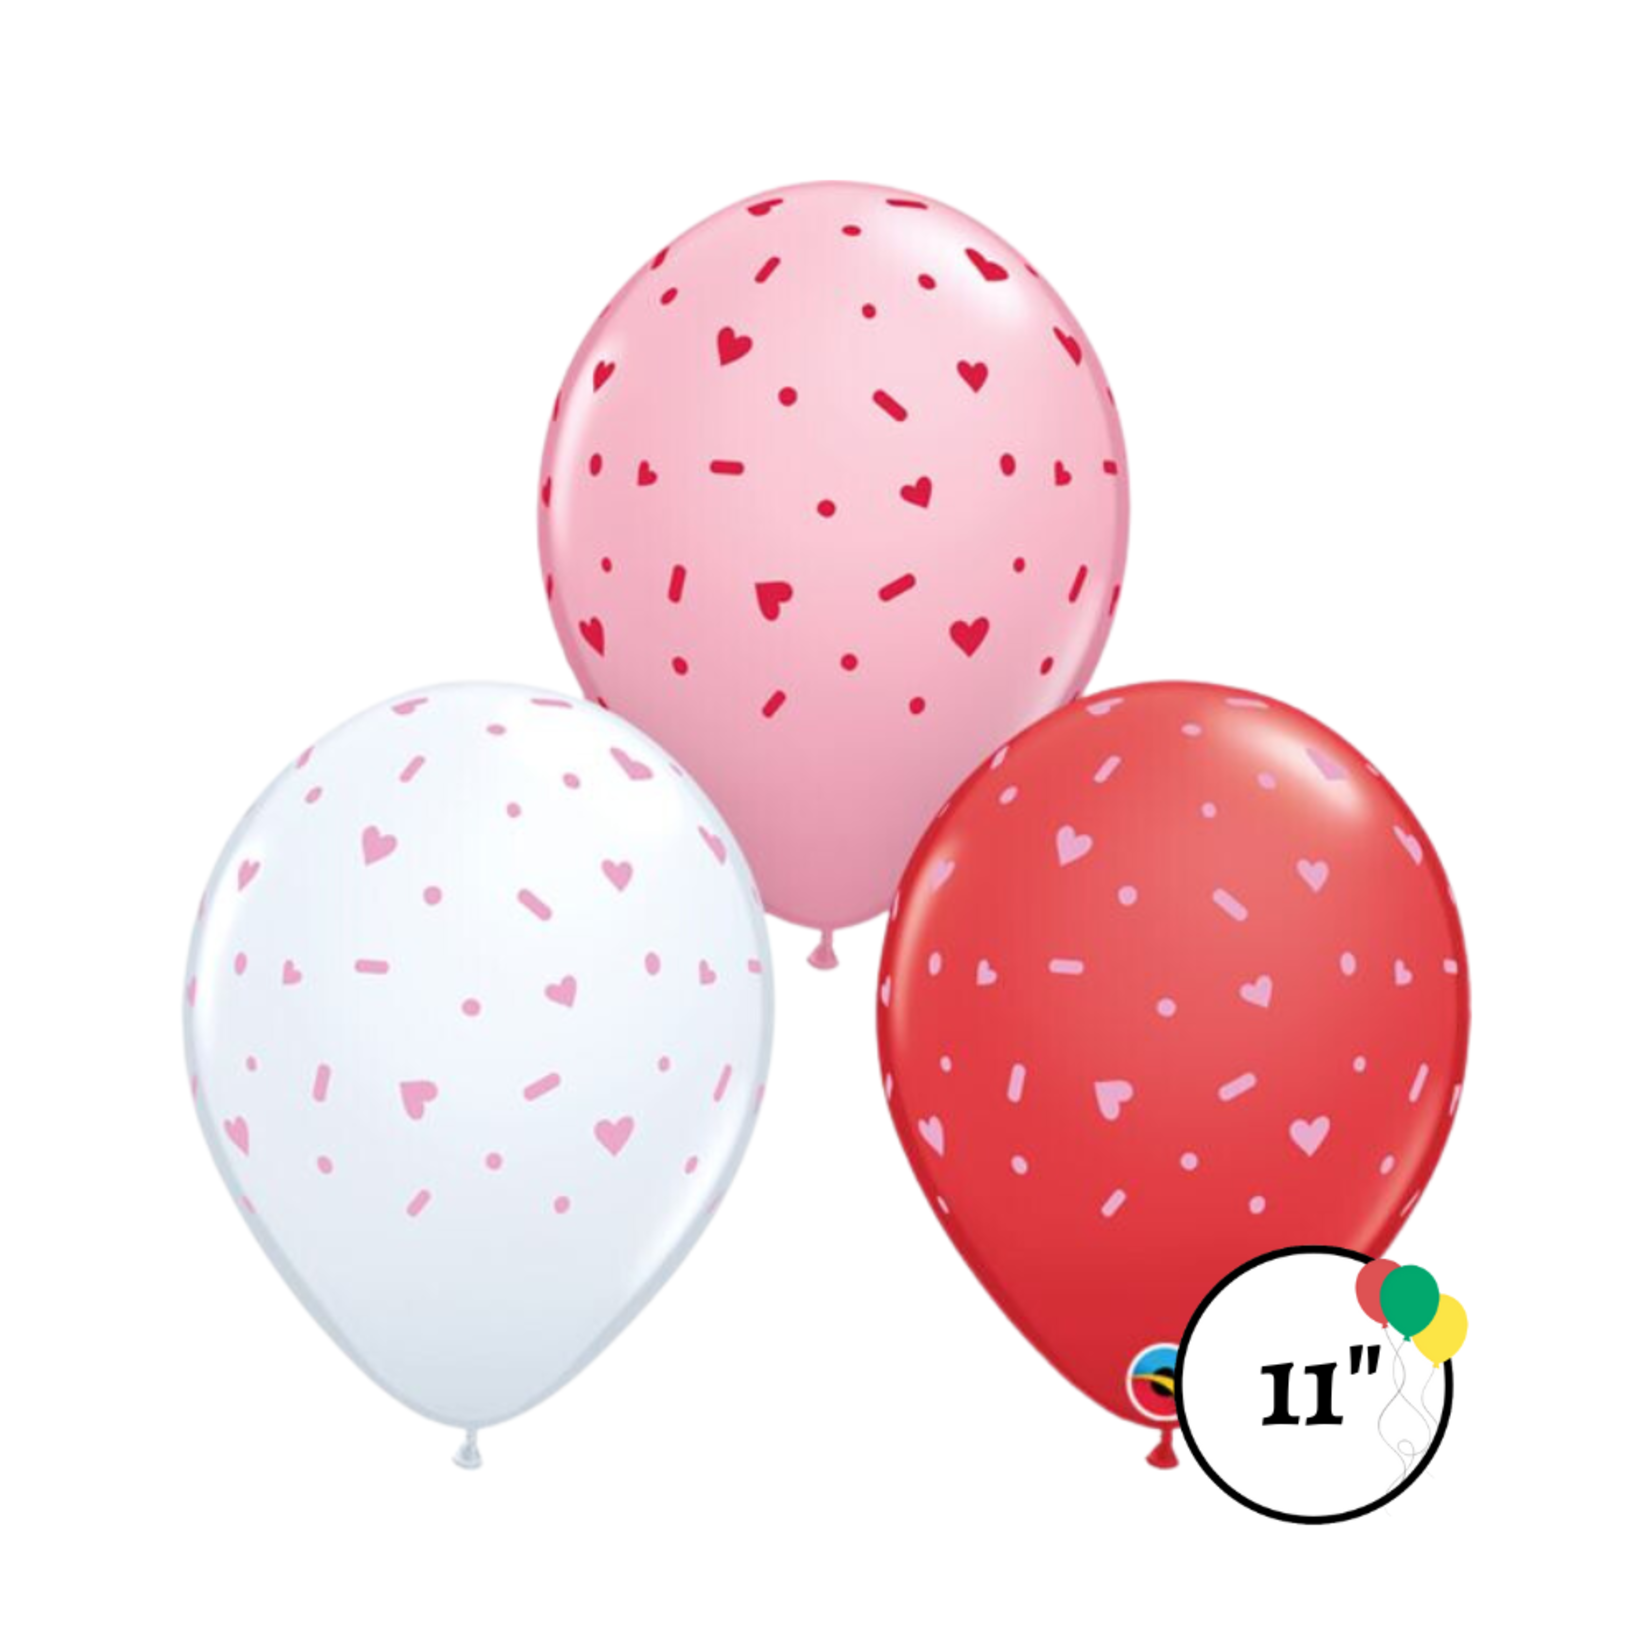 Qualatex Qualatex 11" Hearts & Sprinkles Latex Balloons